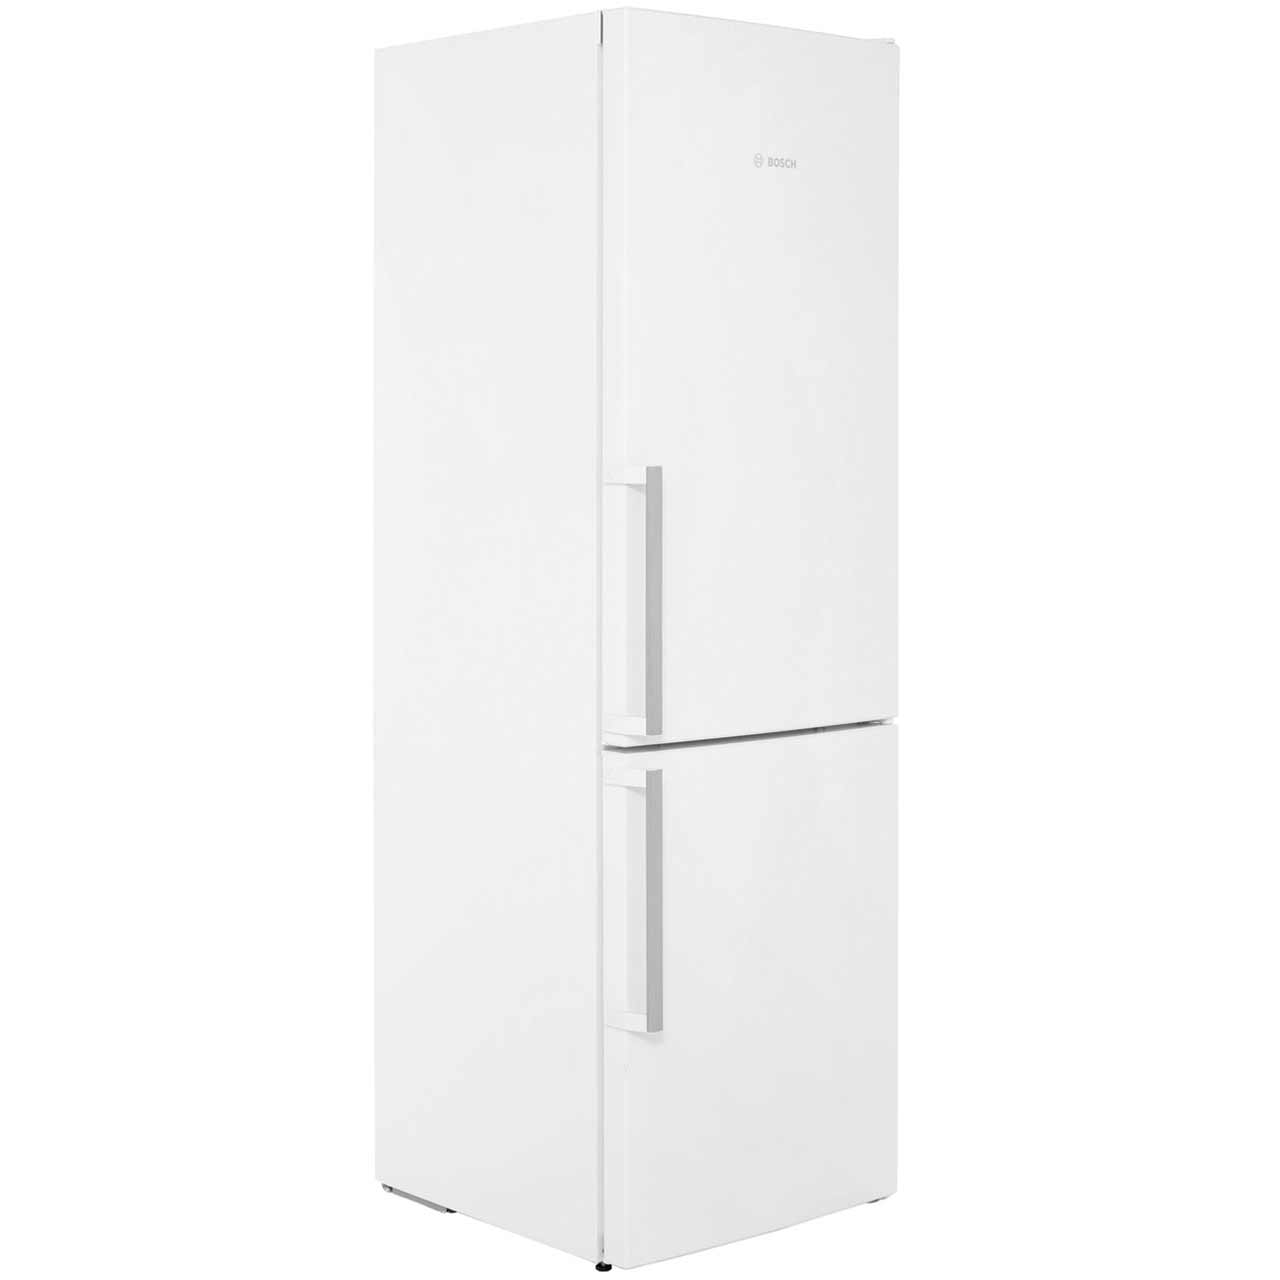 Bosch Serie 6 KGE36BW41G Free Standing Fridge Freezer in White